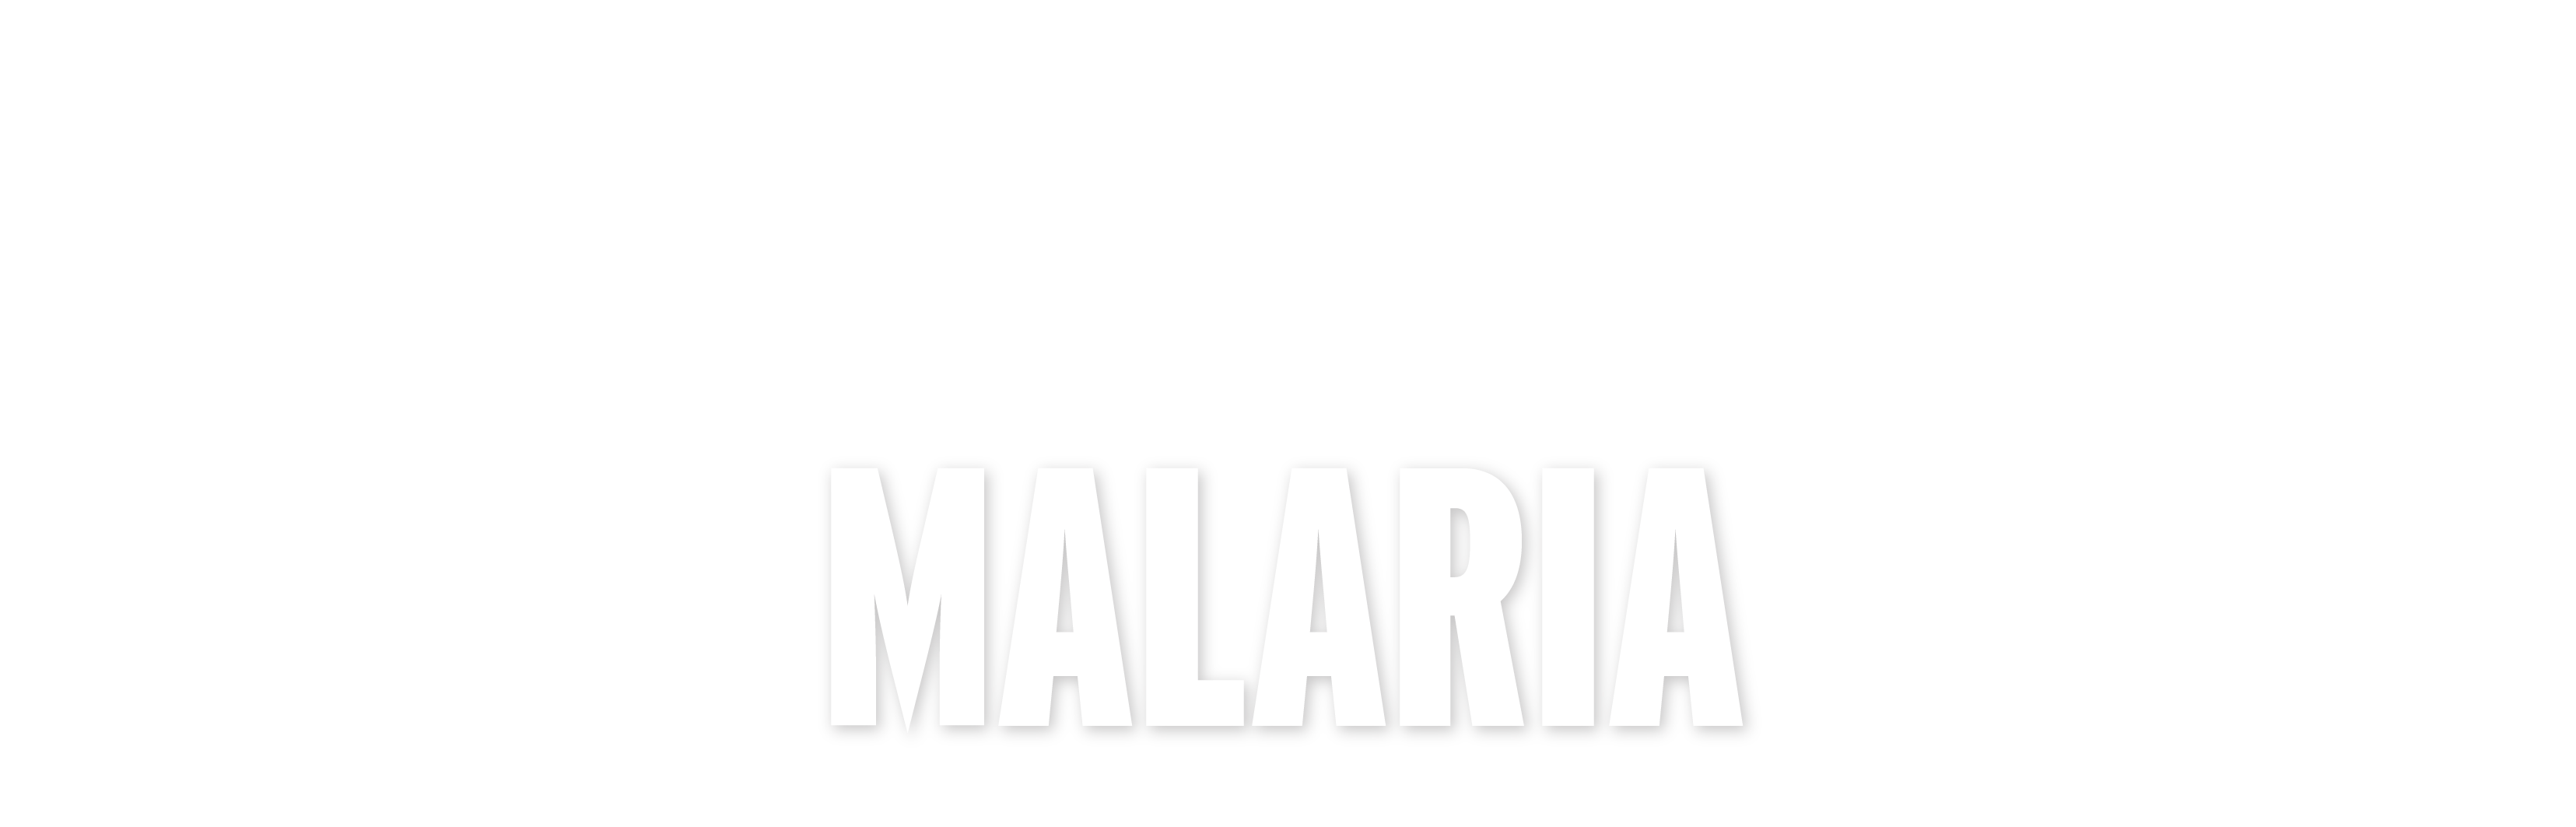 malaria-title_02